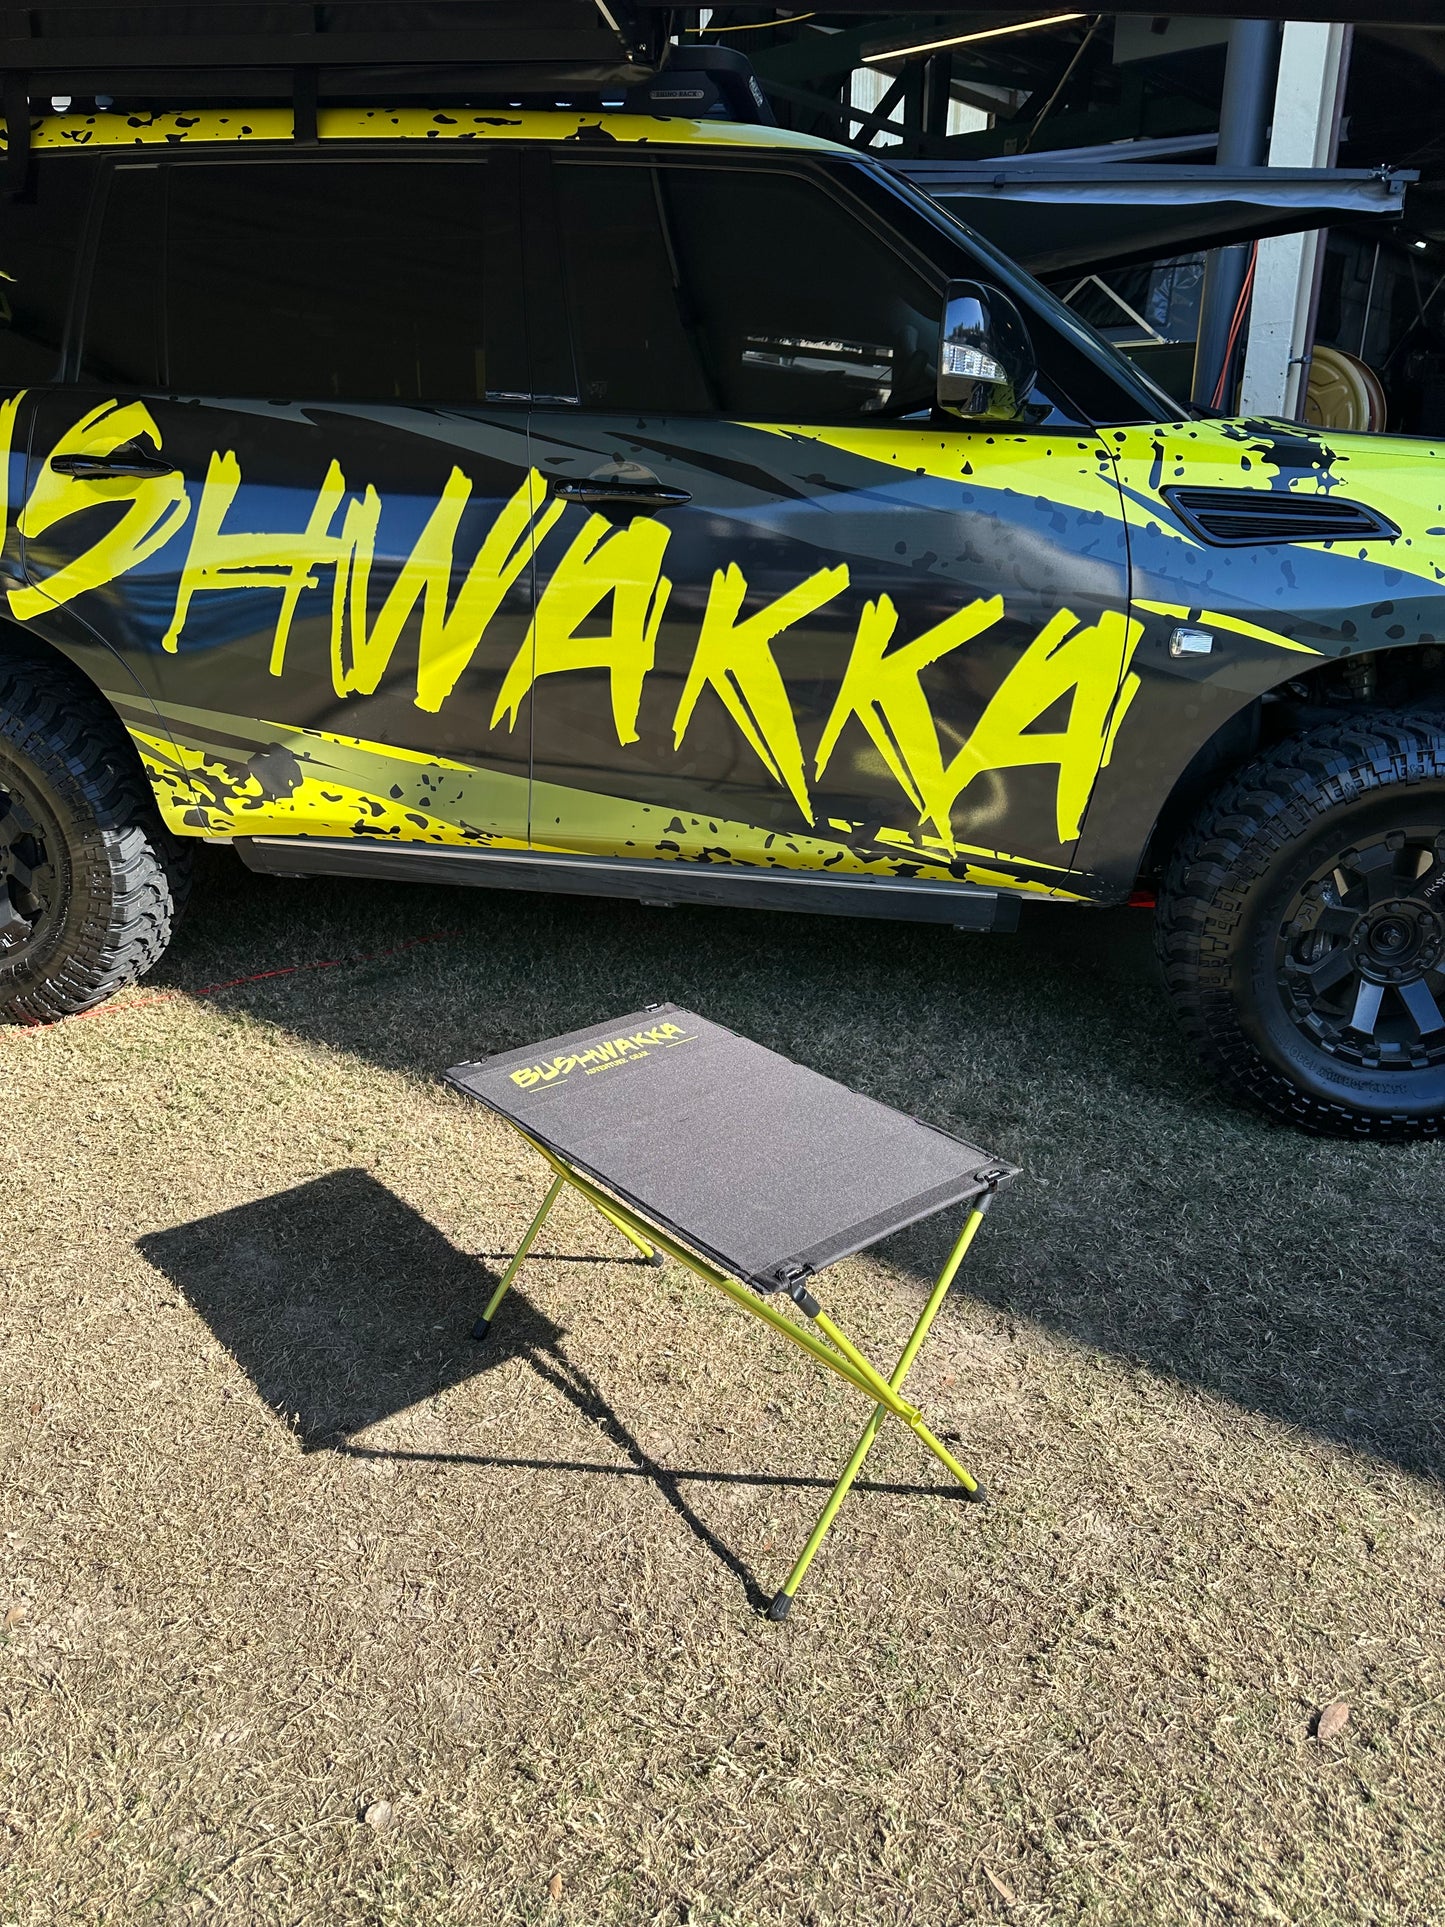 The Bushwakka Lightweight Table